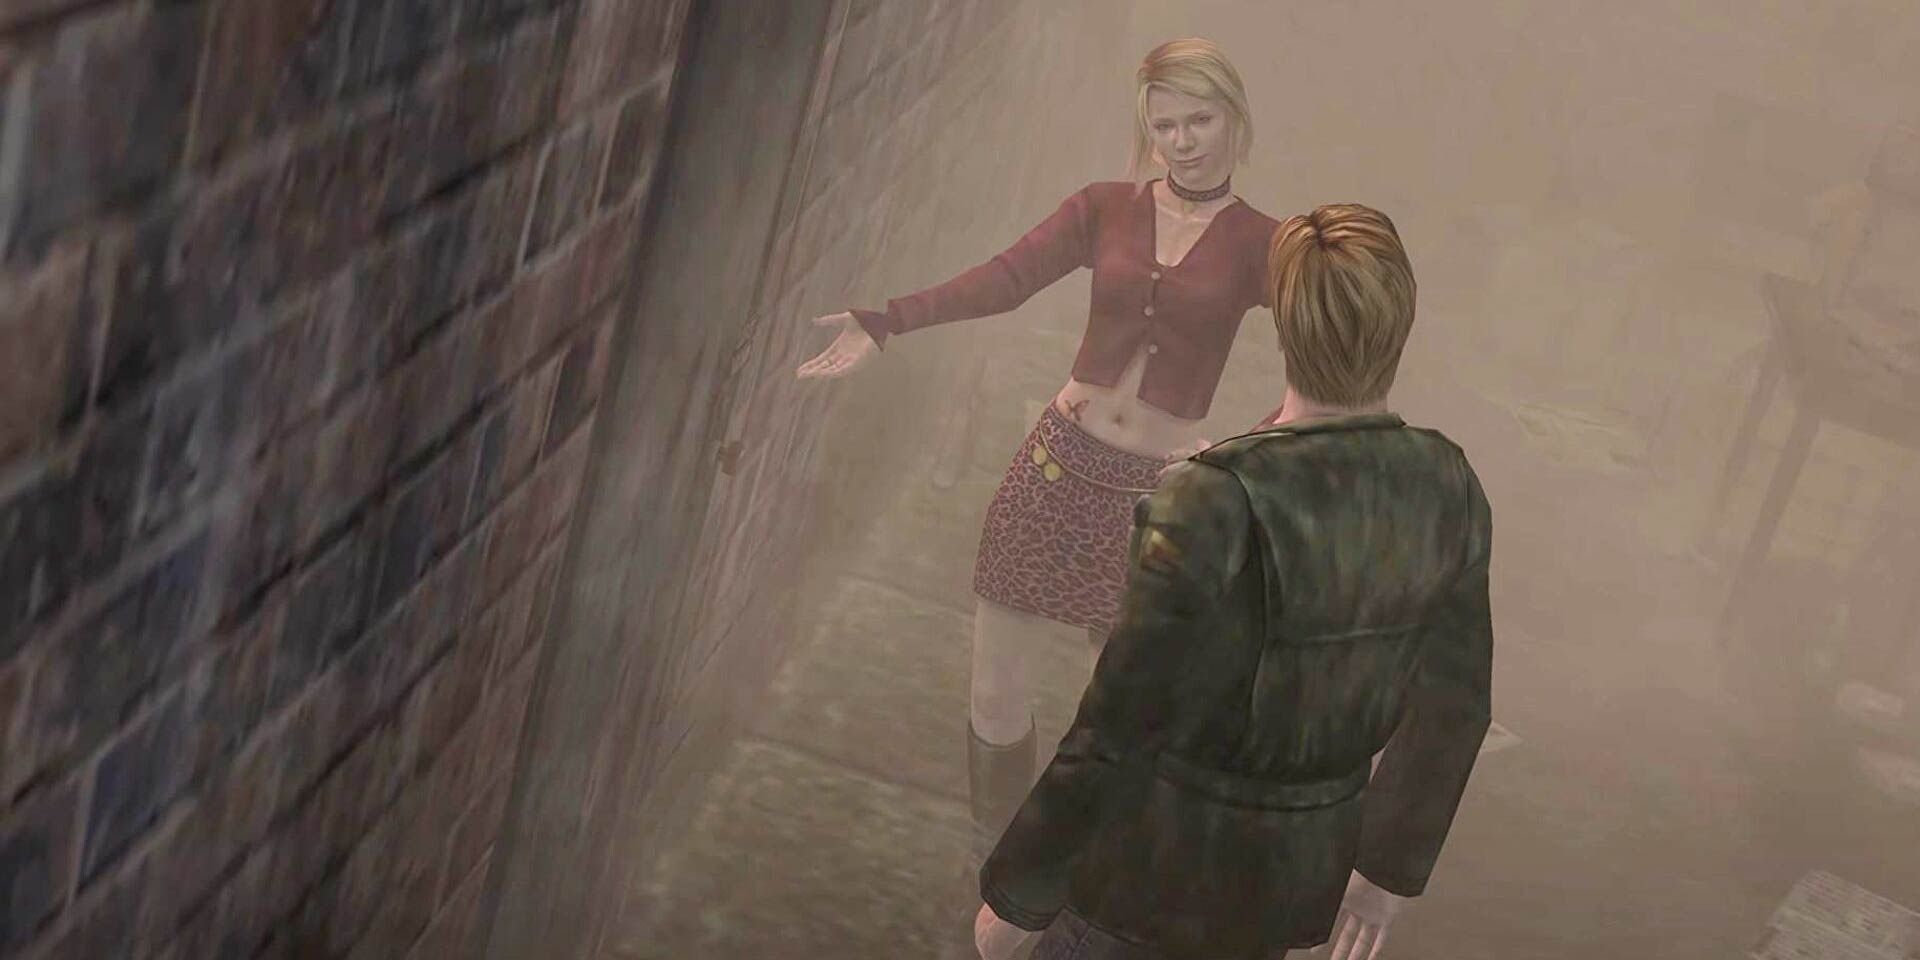 Maria from Silent Hill 2 beckoning James Sunderland through a door.